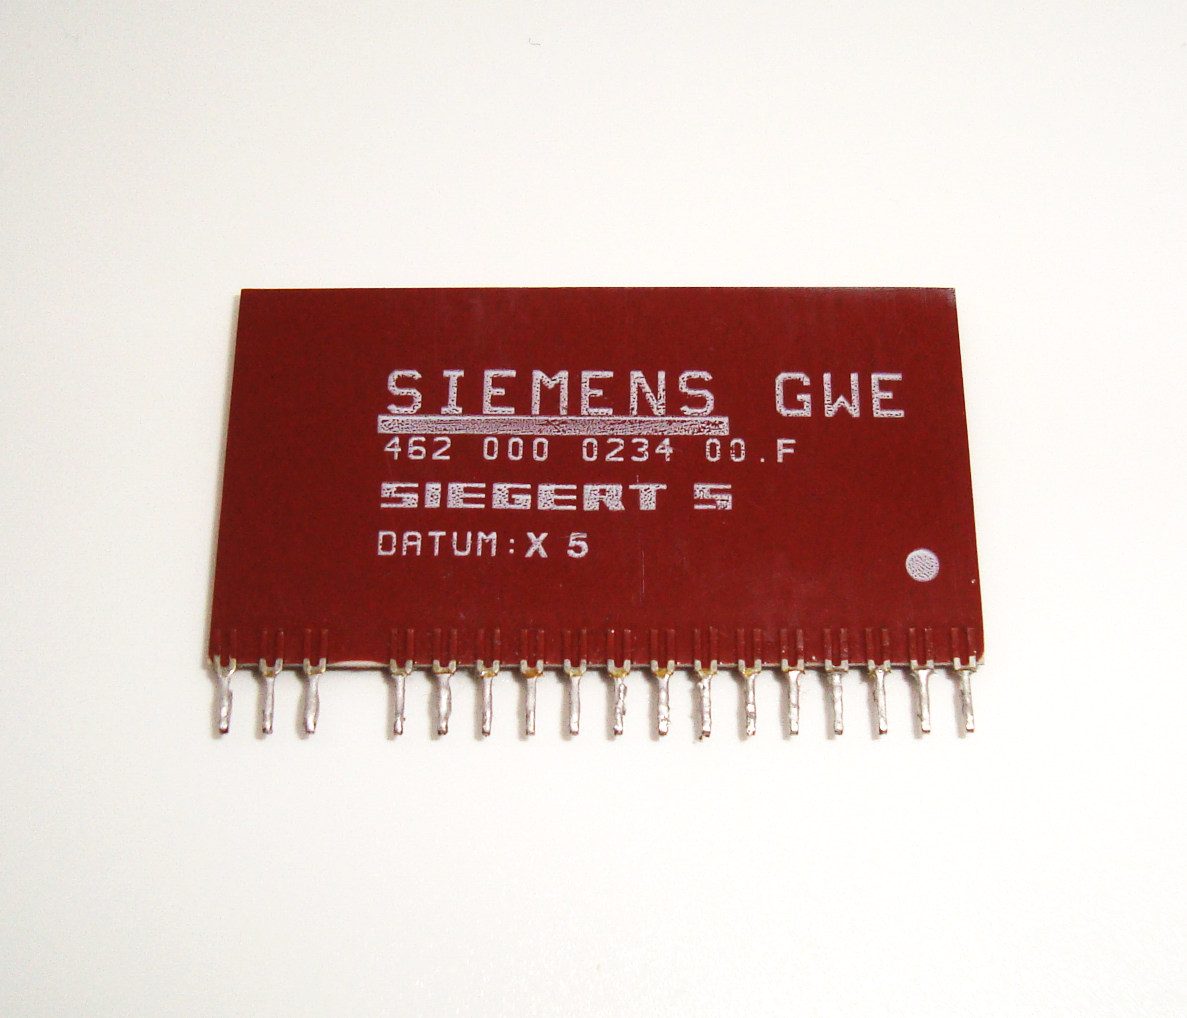 Siemens 462000023400.F Hybrid Ic